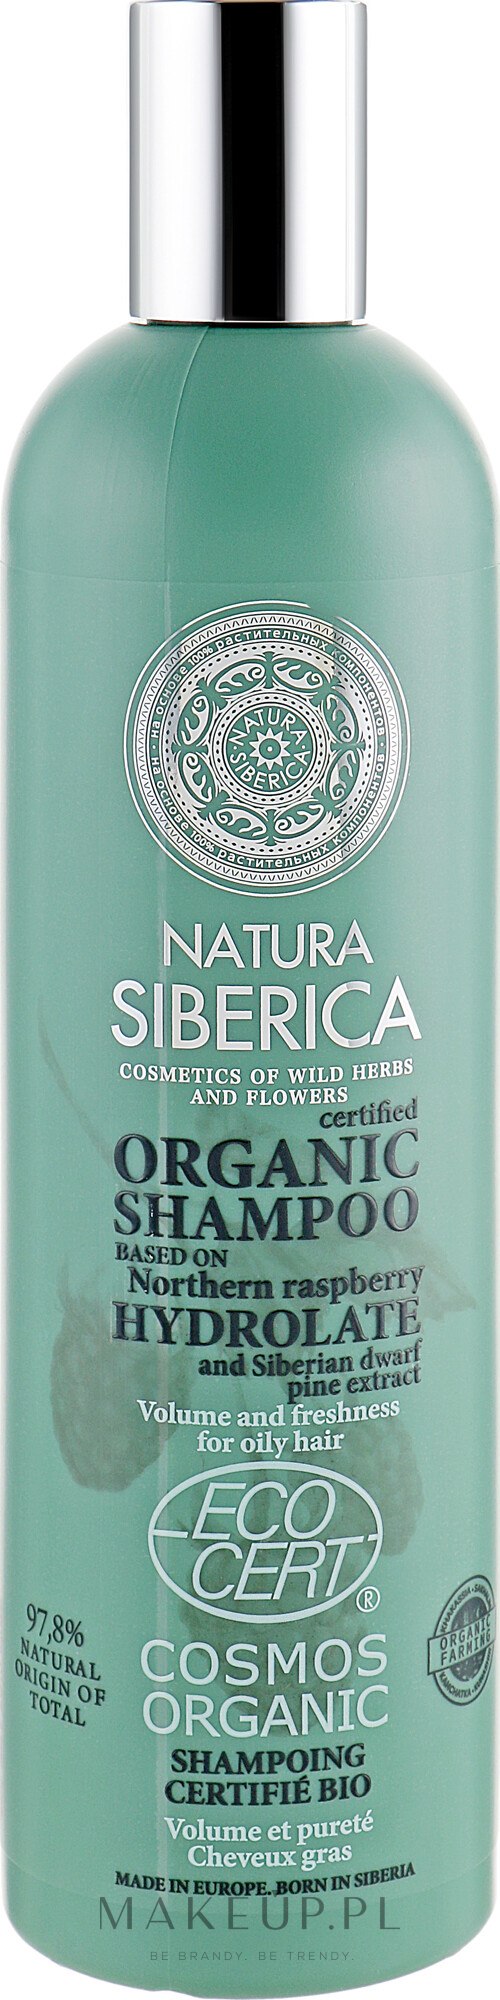 szampon natura siberia